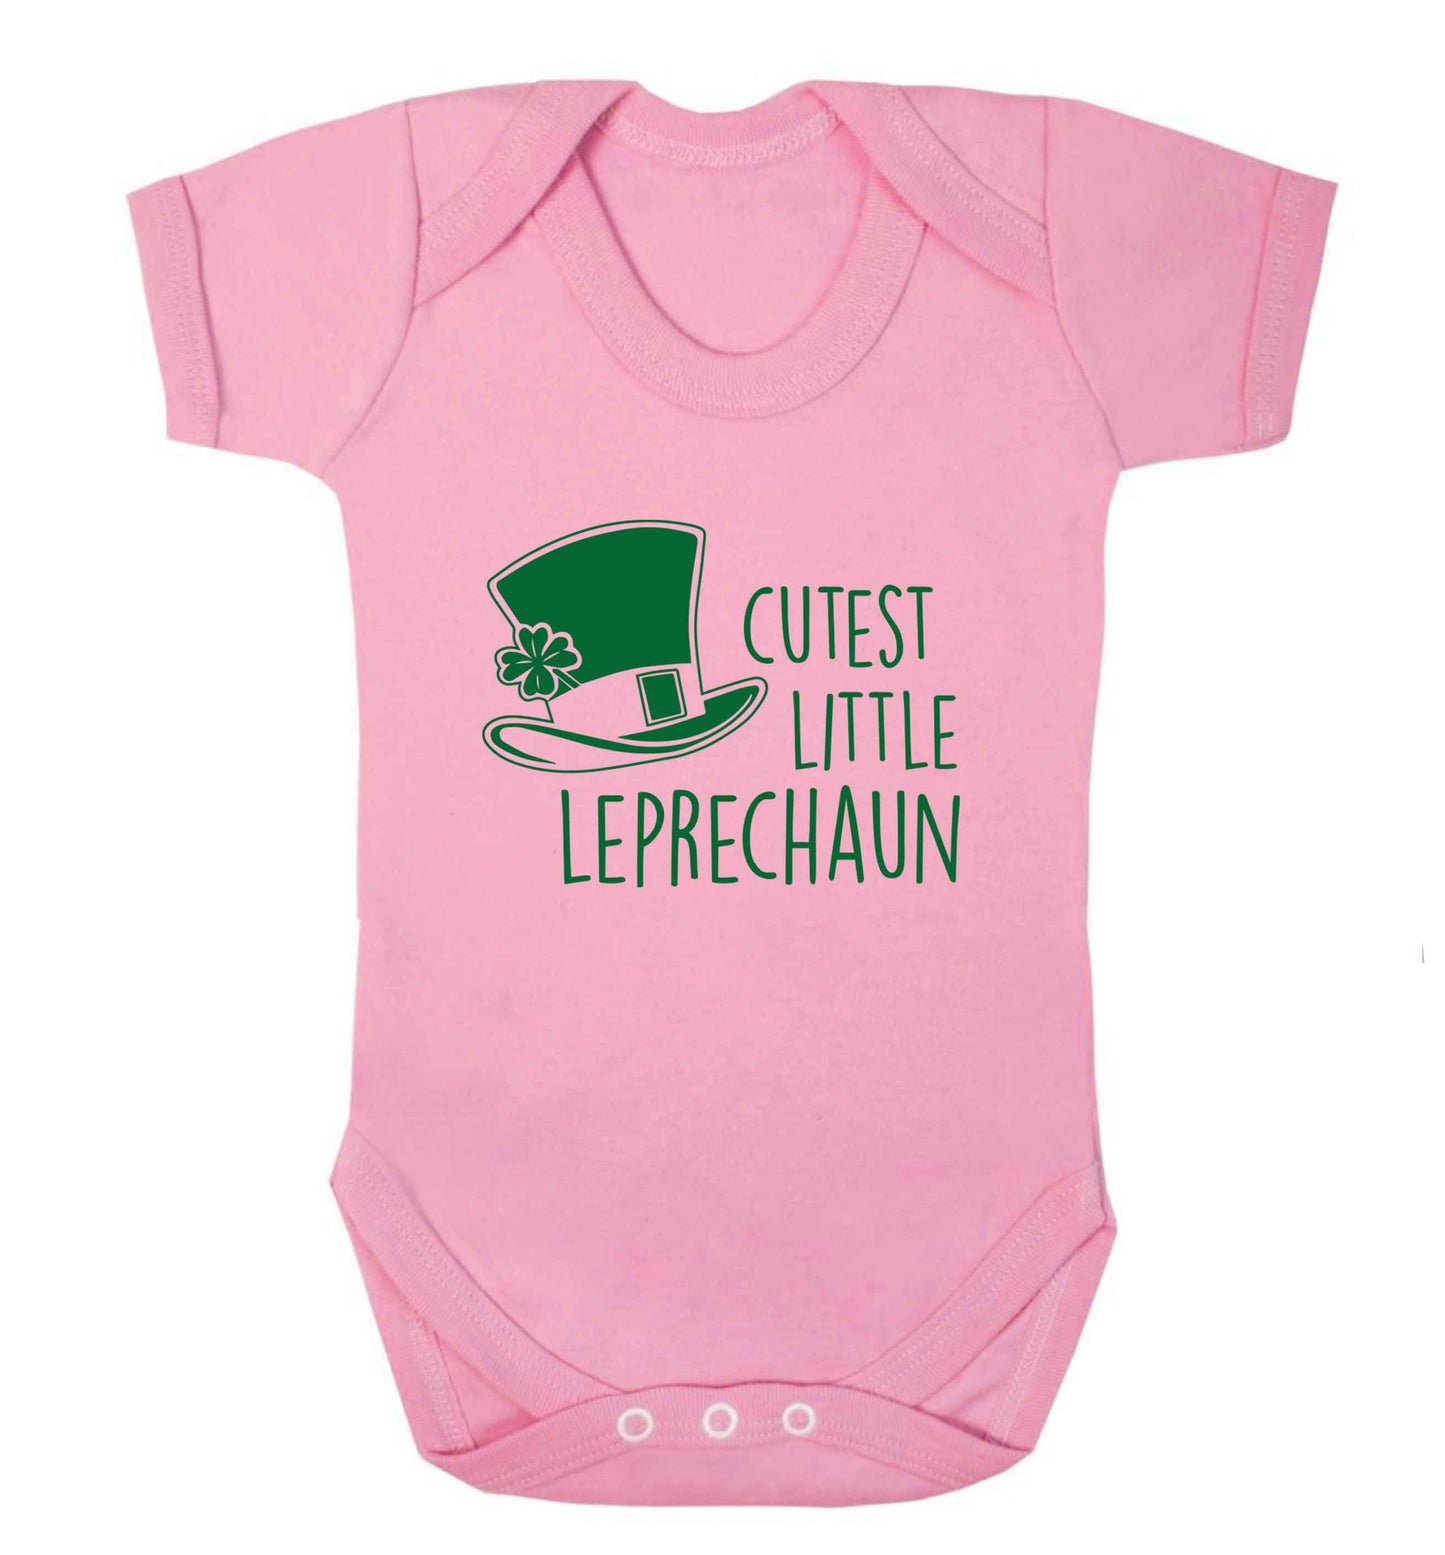 Cutest little leprechaun baby vest pale pink 18-24 months